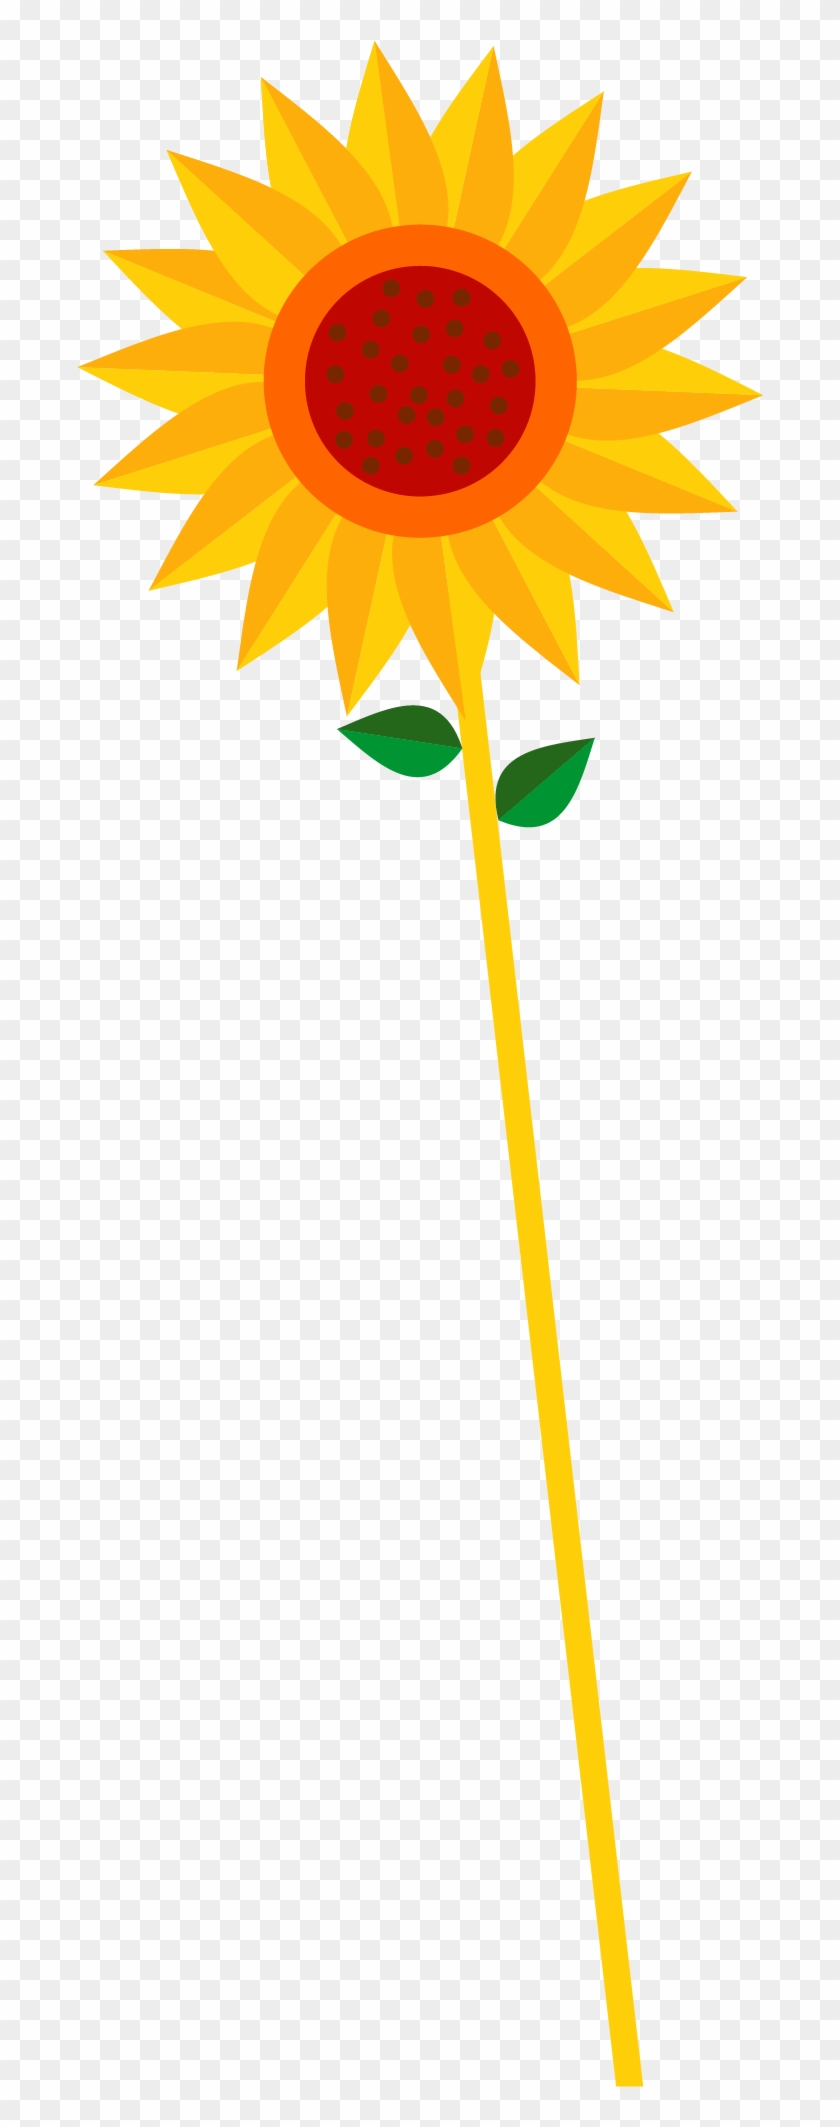 Common Sunflower Euclidean Vector - Common Sunflower Euclidean Vector #777579